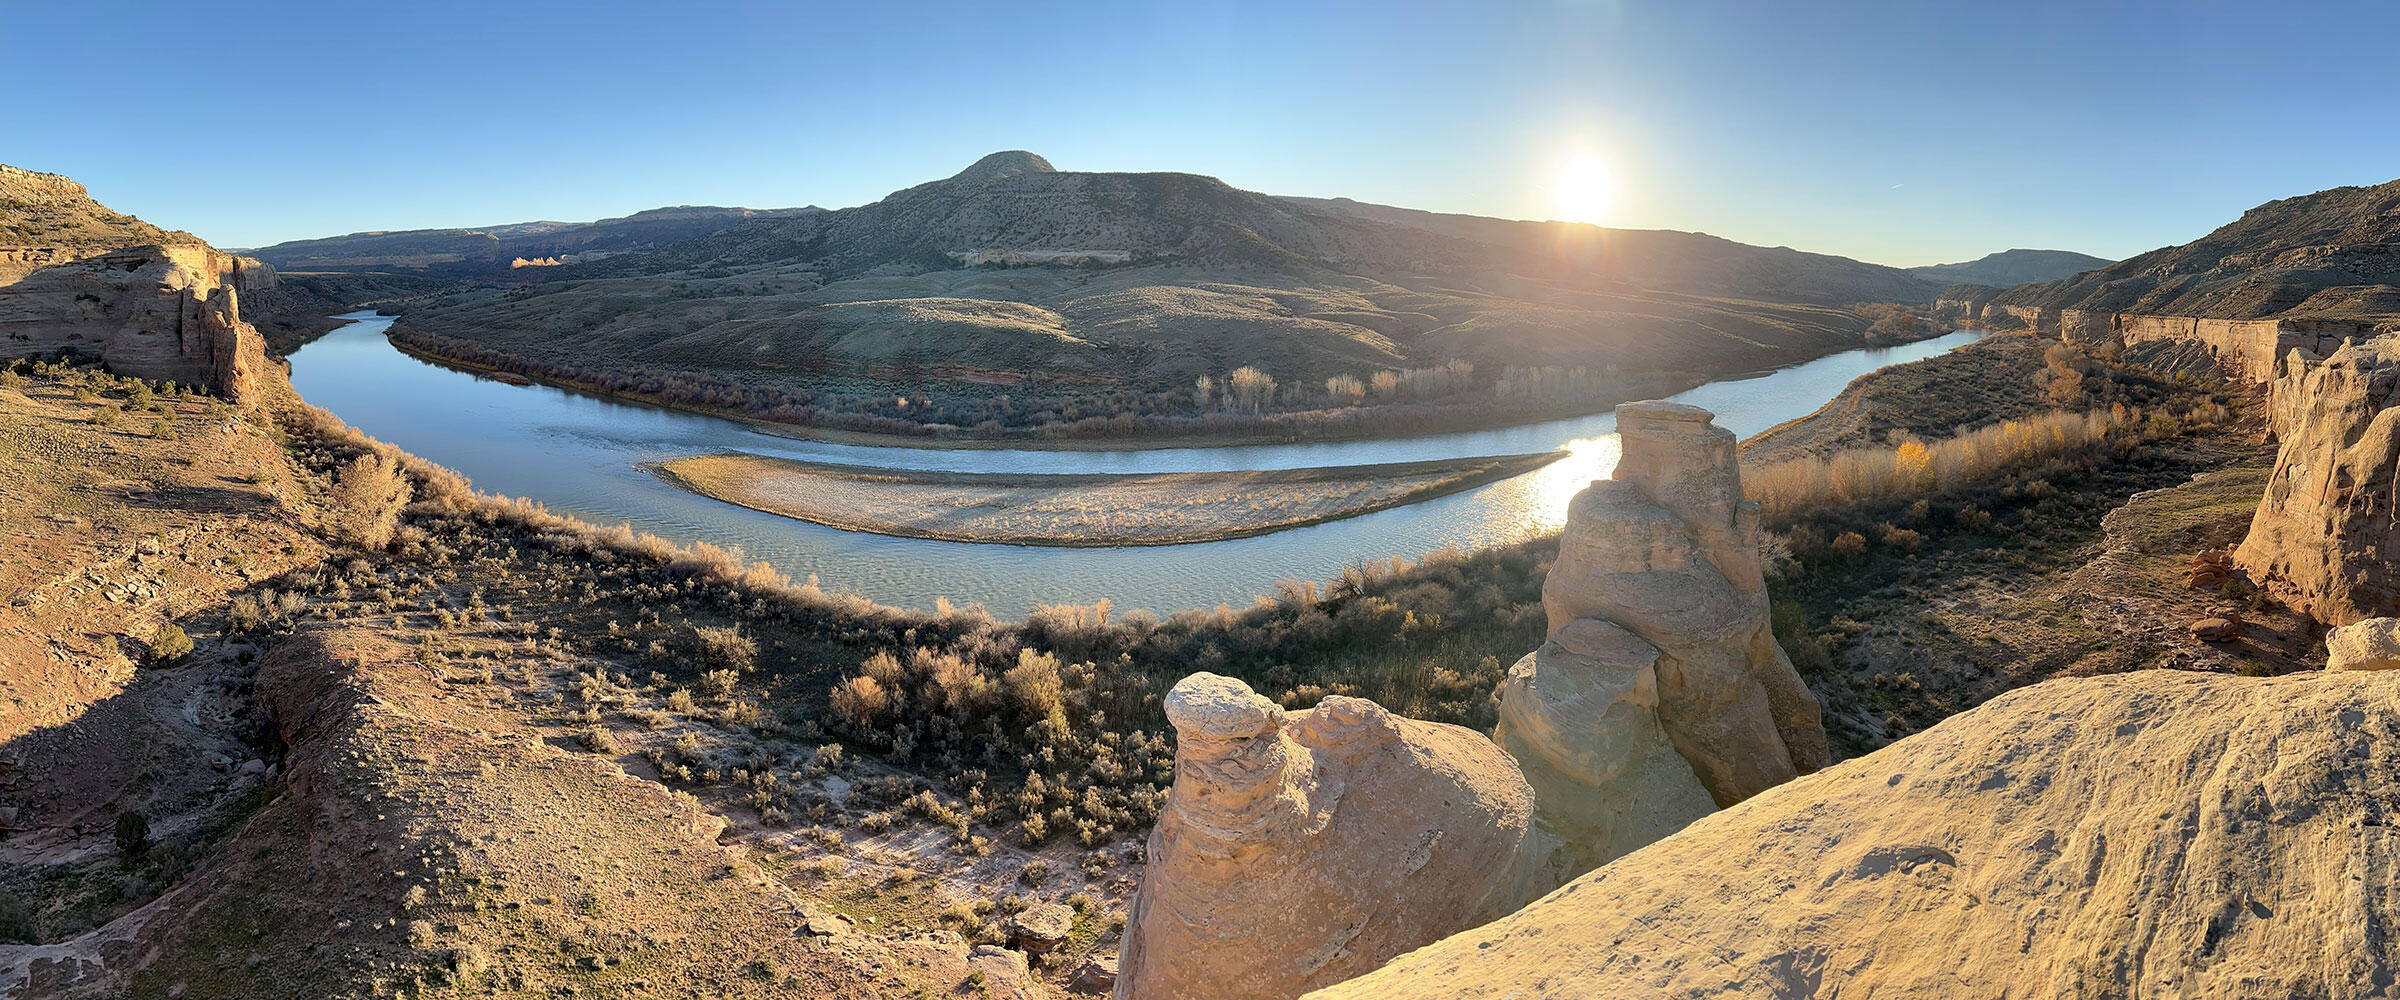 Colorado River runs through a dry landscape.